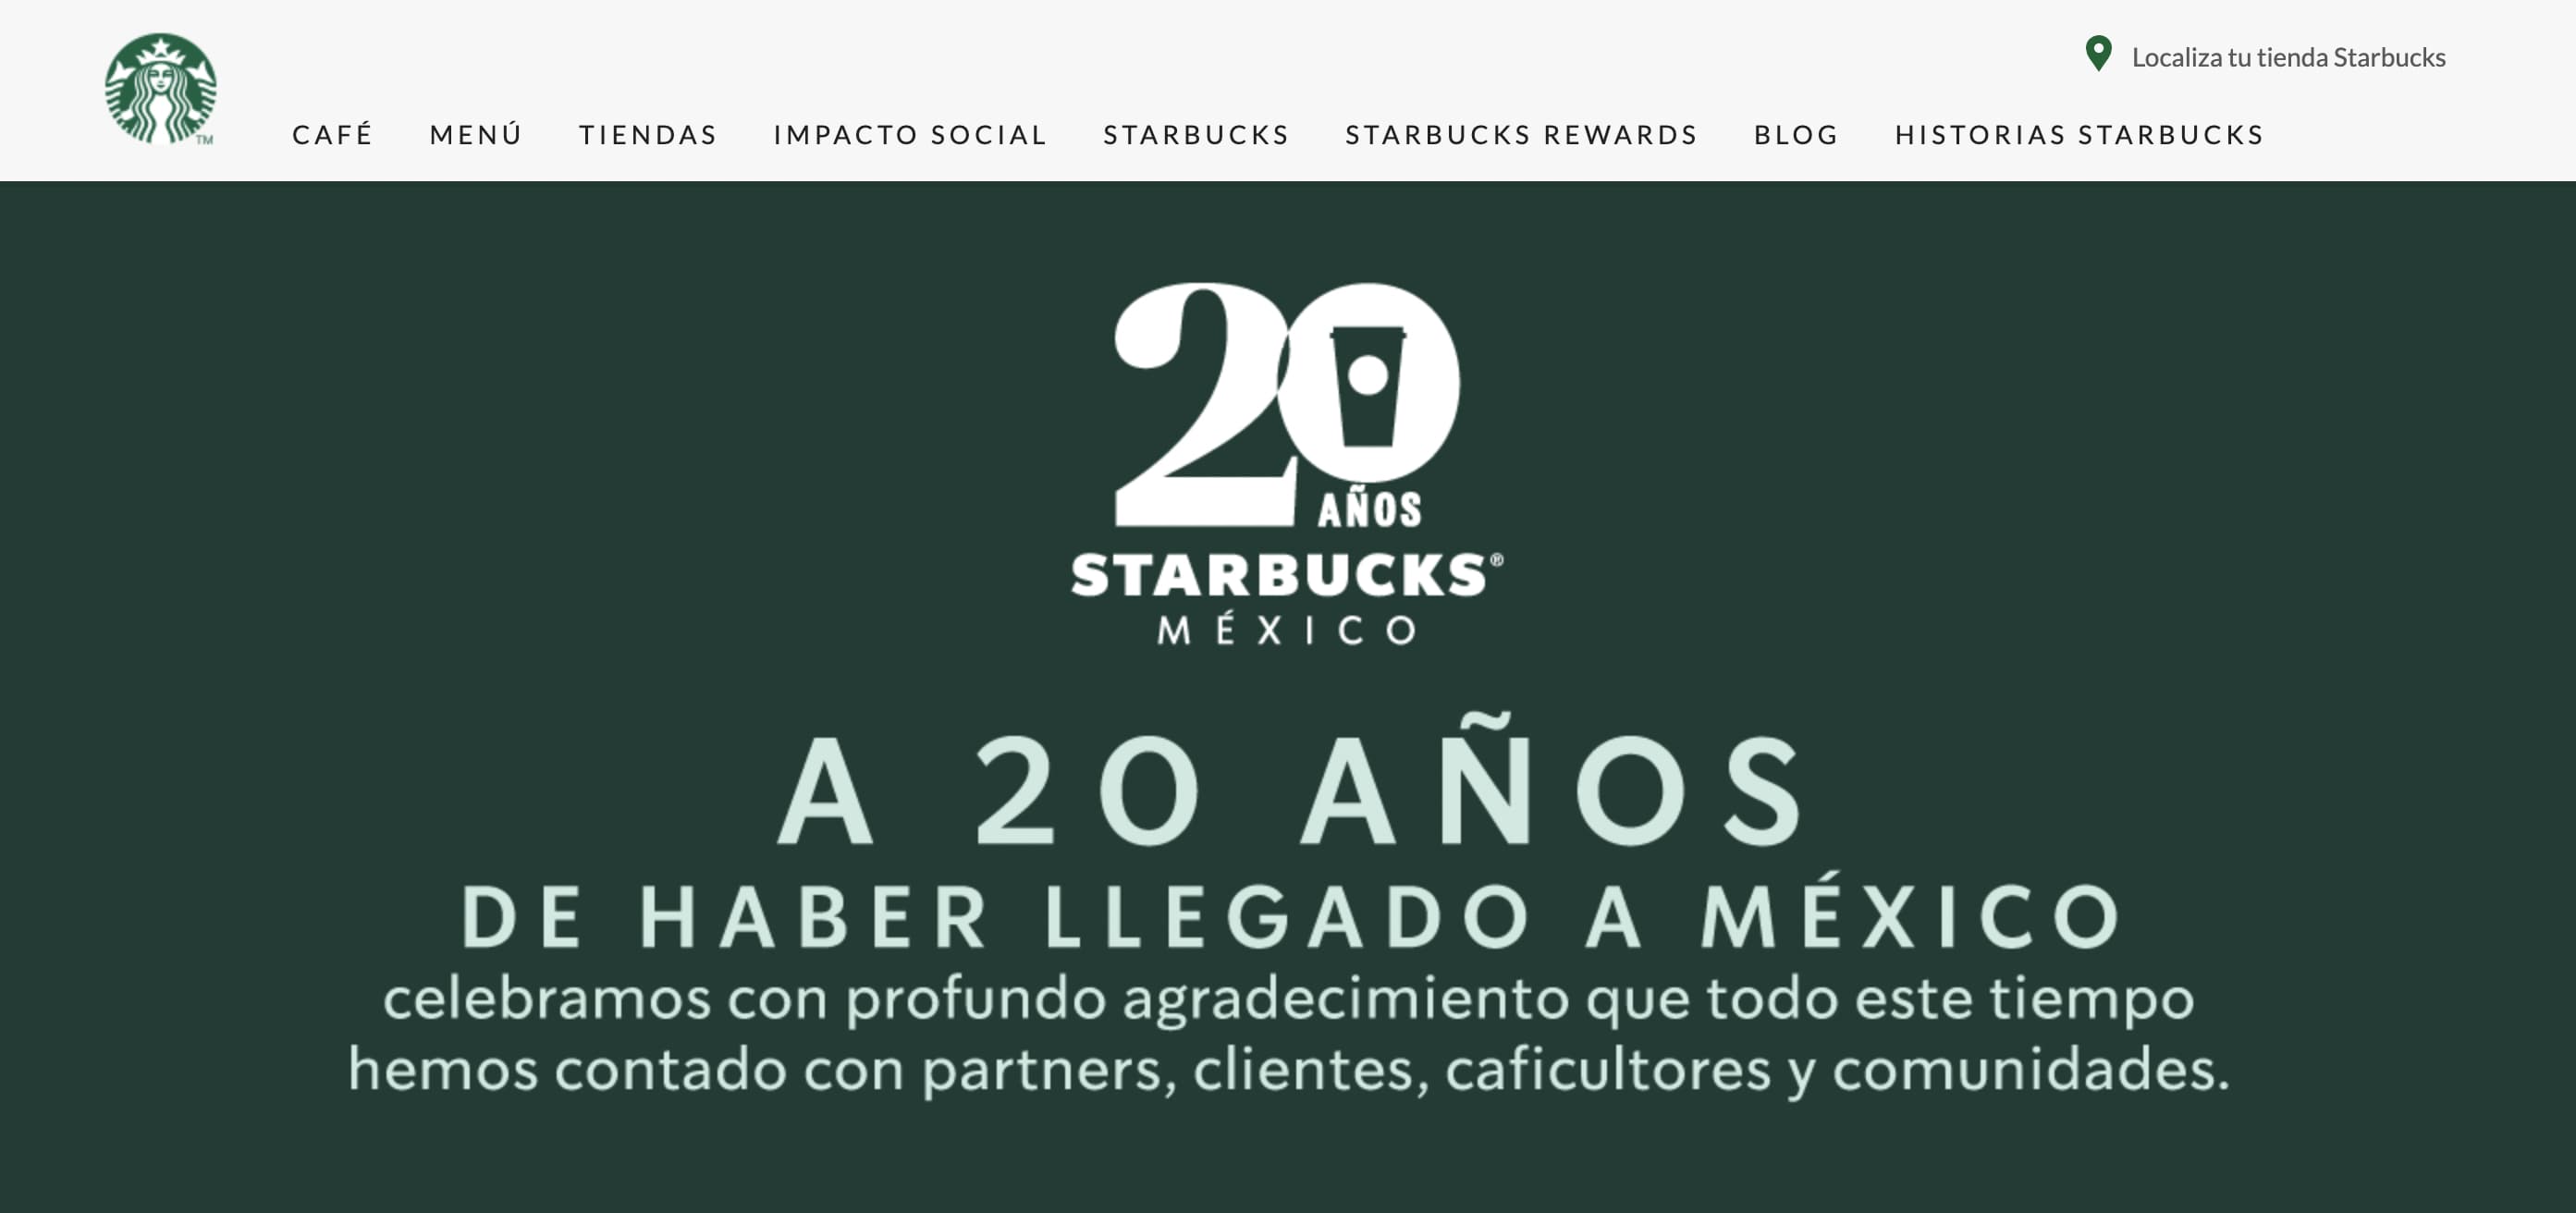 Ejemplos de marketing estratégico: Starbucks